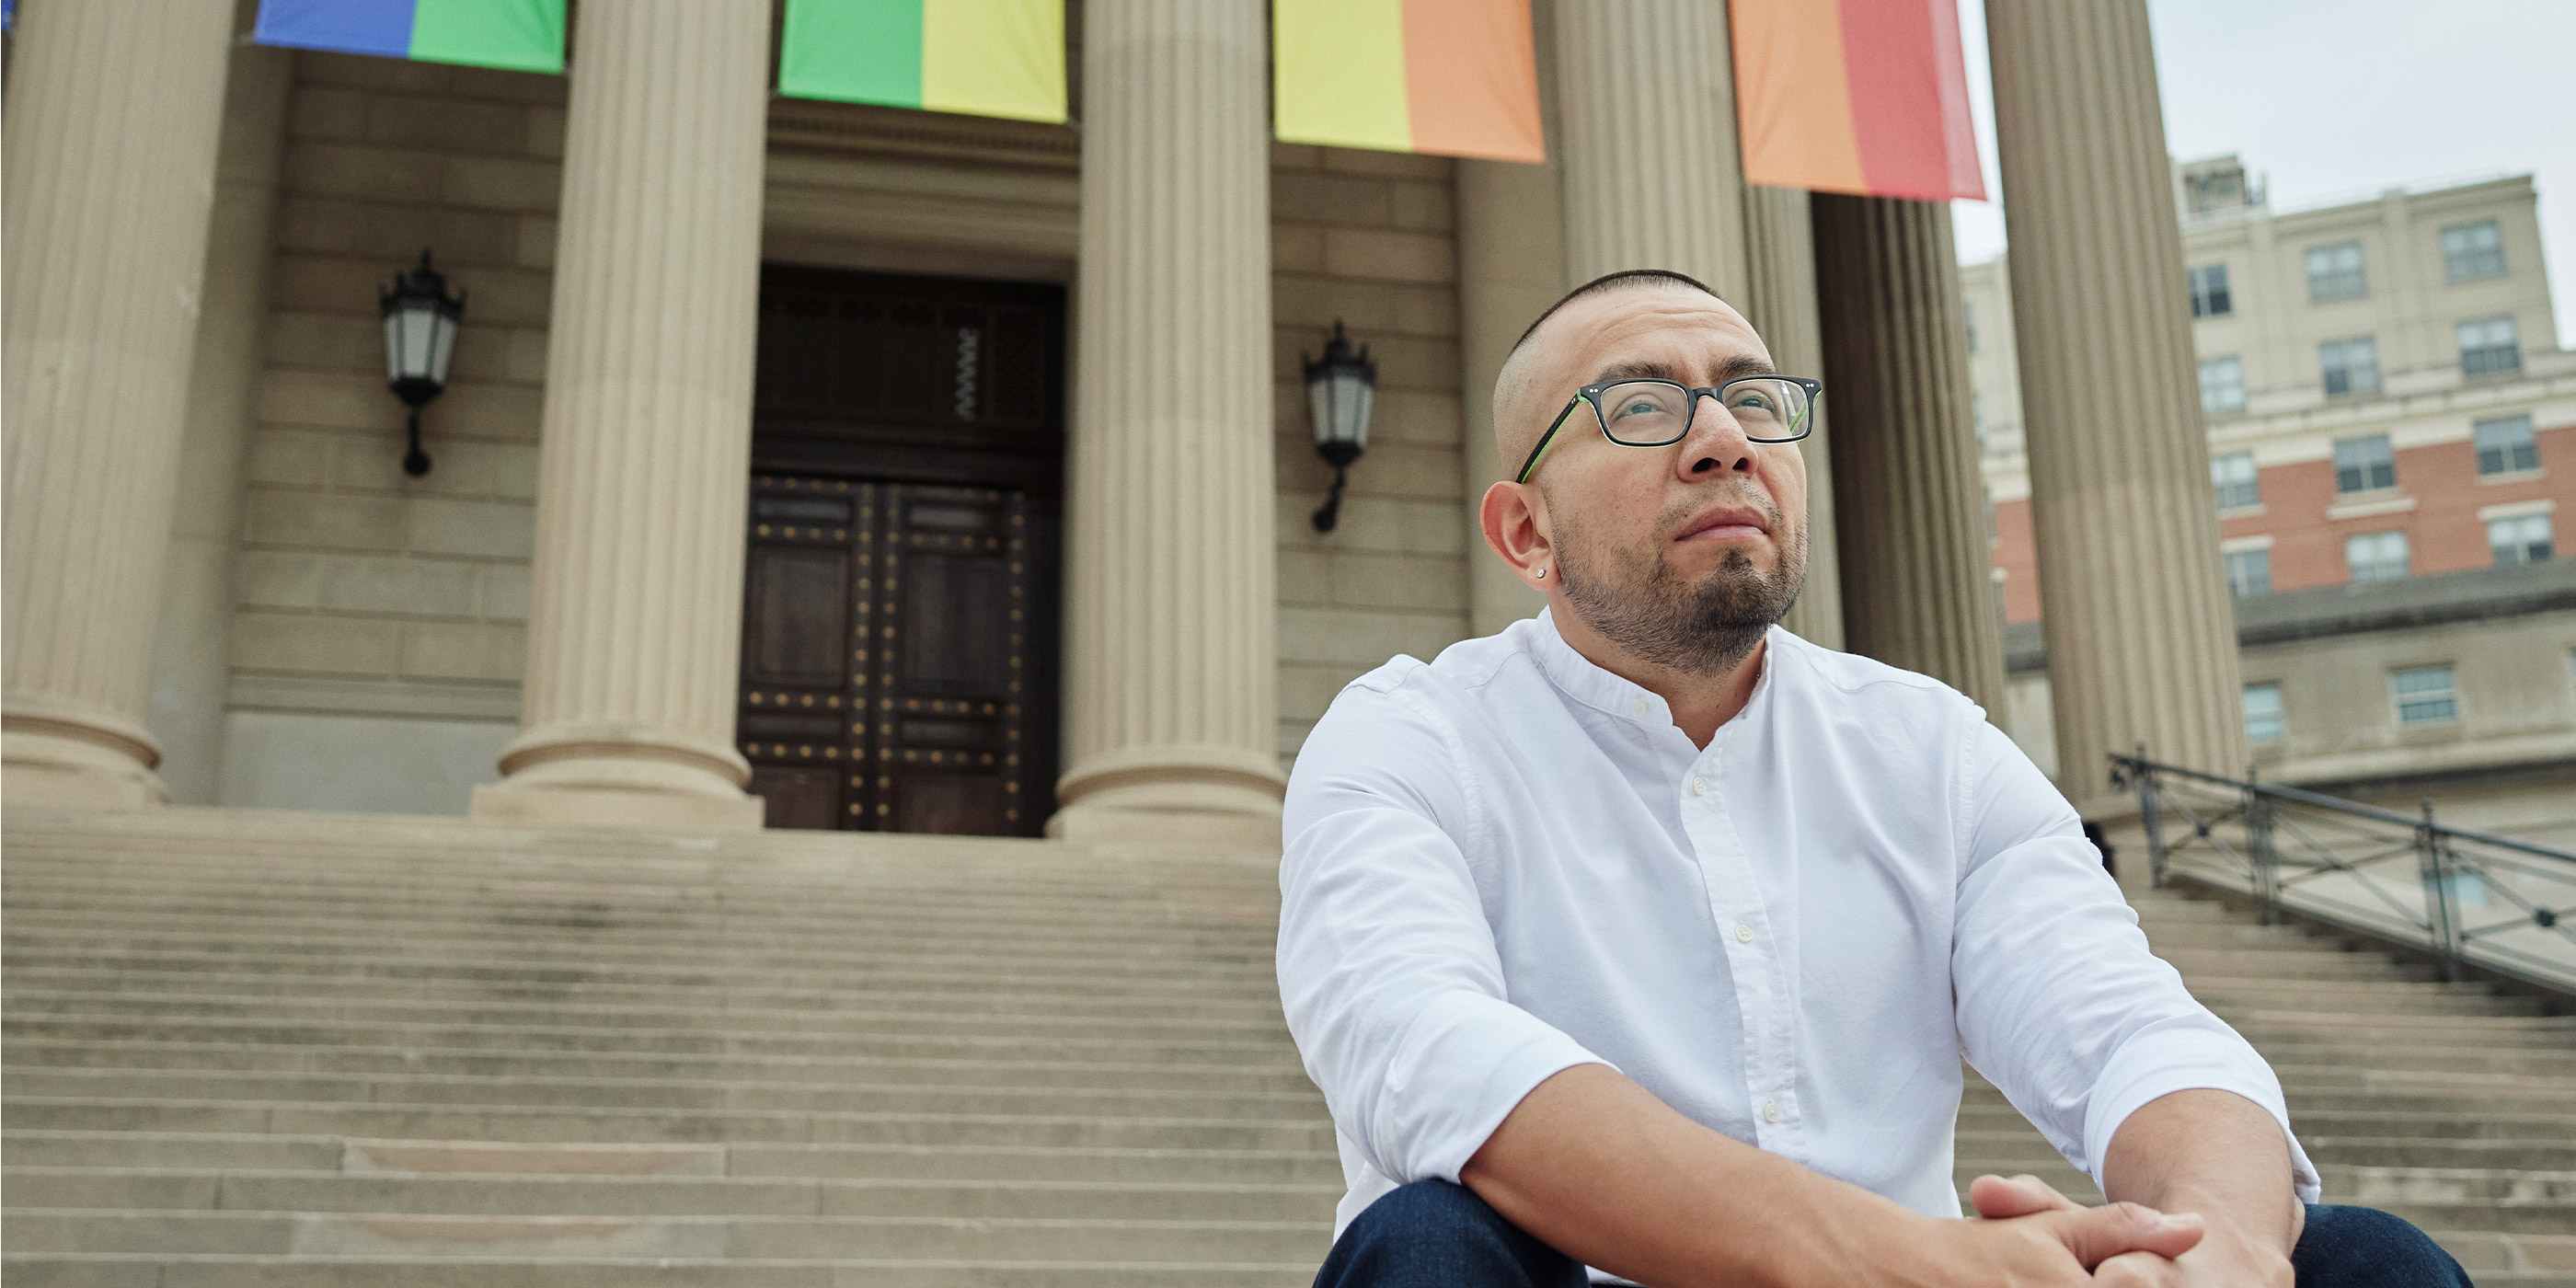 Ricardo Martinez sitting on the steps of a municipal building in Washington, DC.